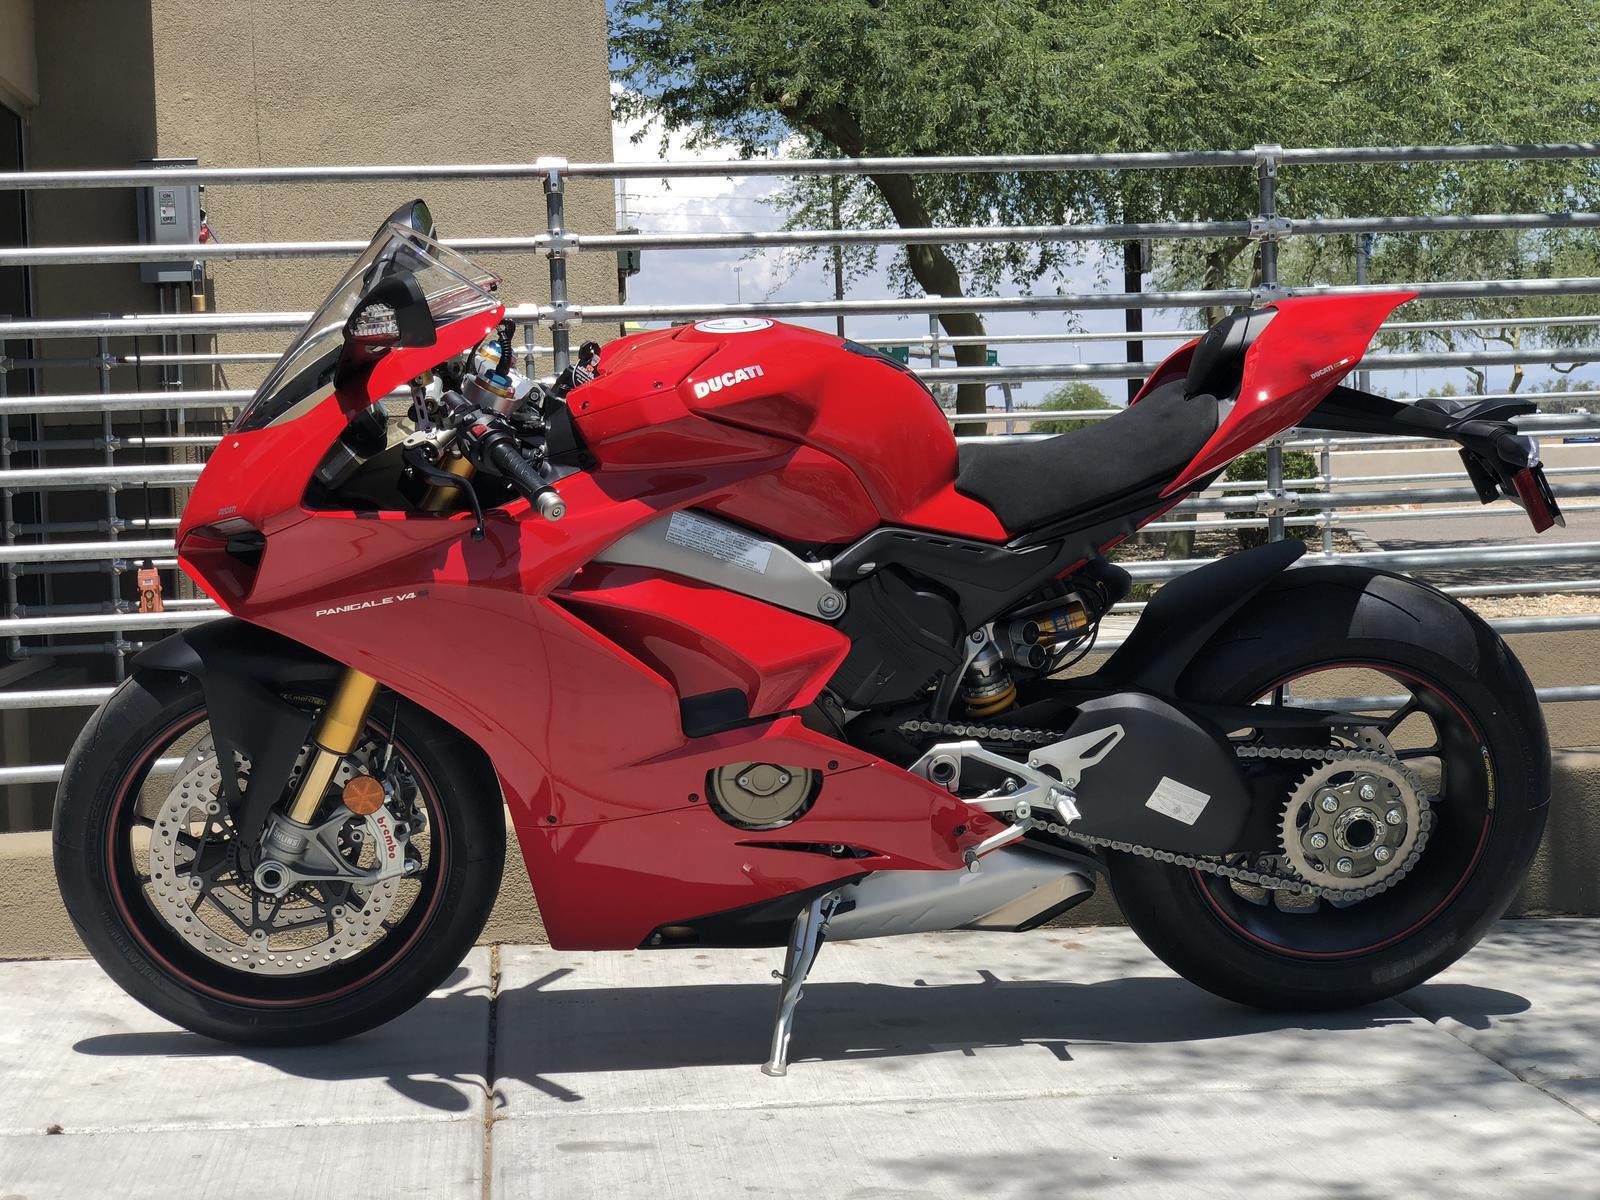 Ducati 1100 PANIGALE V4 S in Peoria, AZ. GO